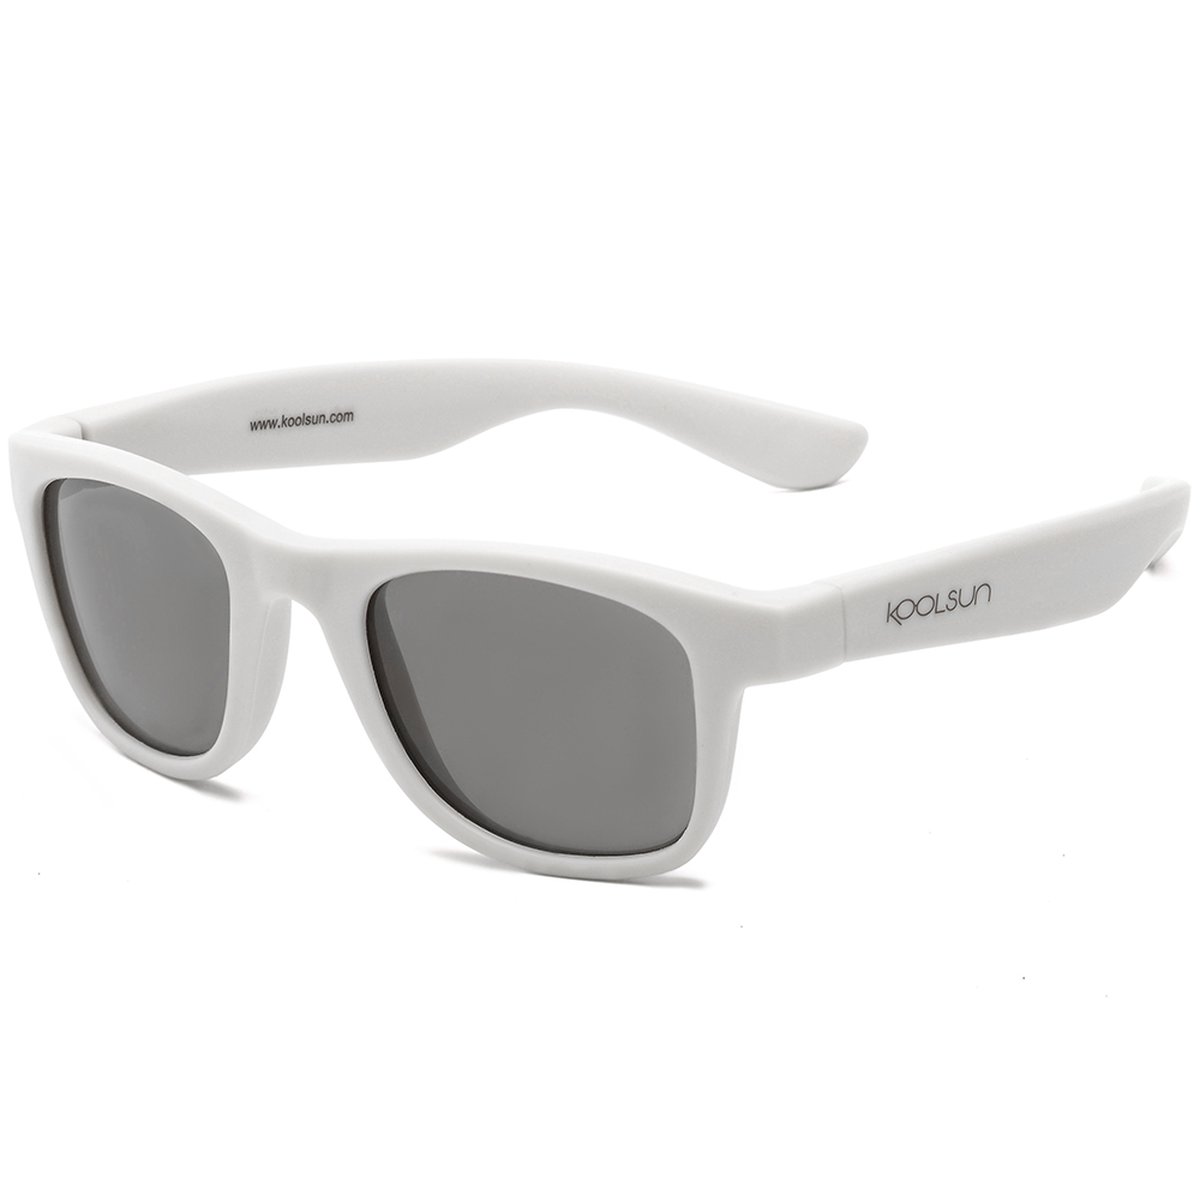 KOOLSUN® Wave - kinder zonnebril - Pale Grey - 3-10 jaar - UV400 - Categorie 3